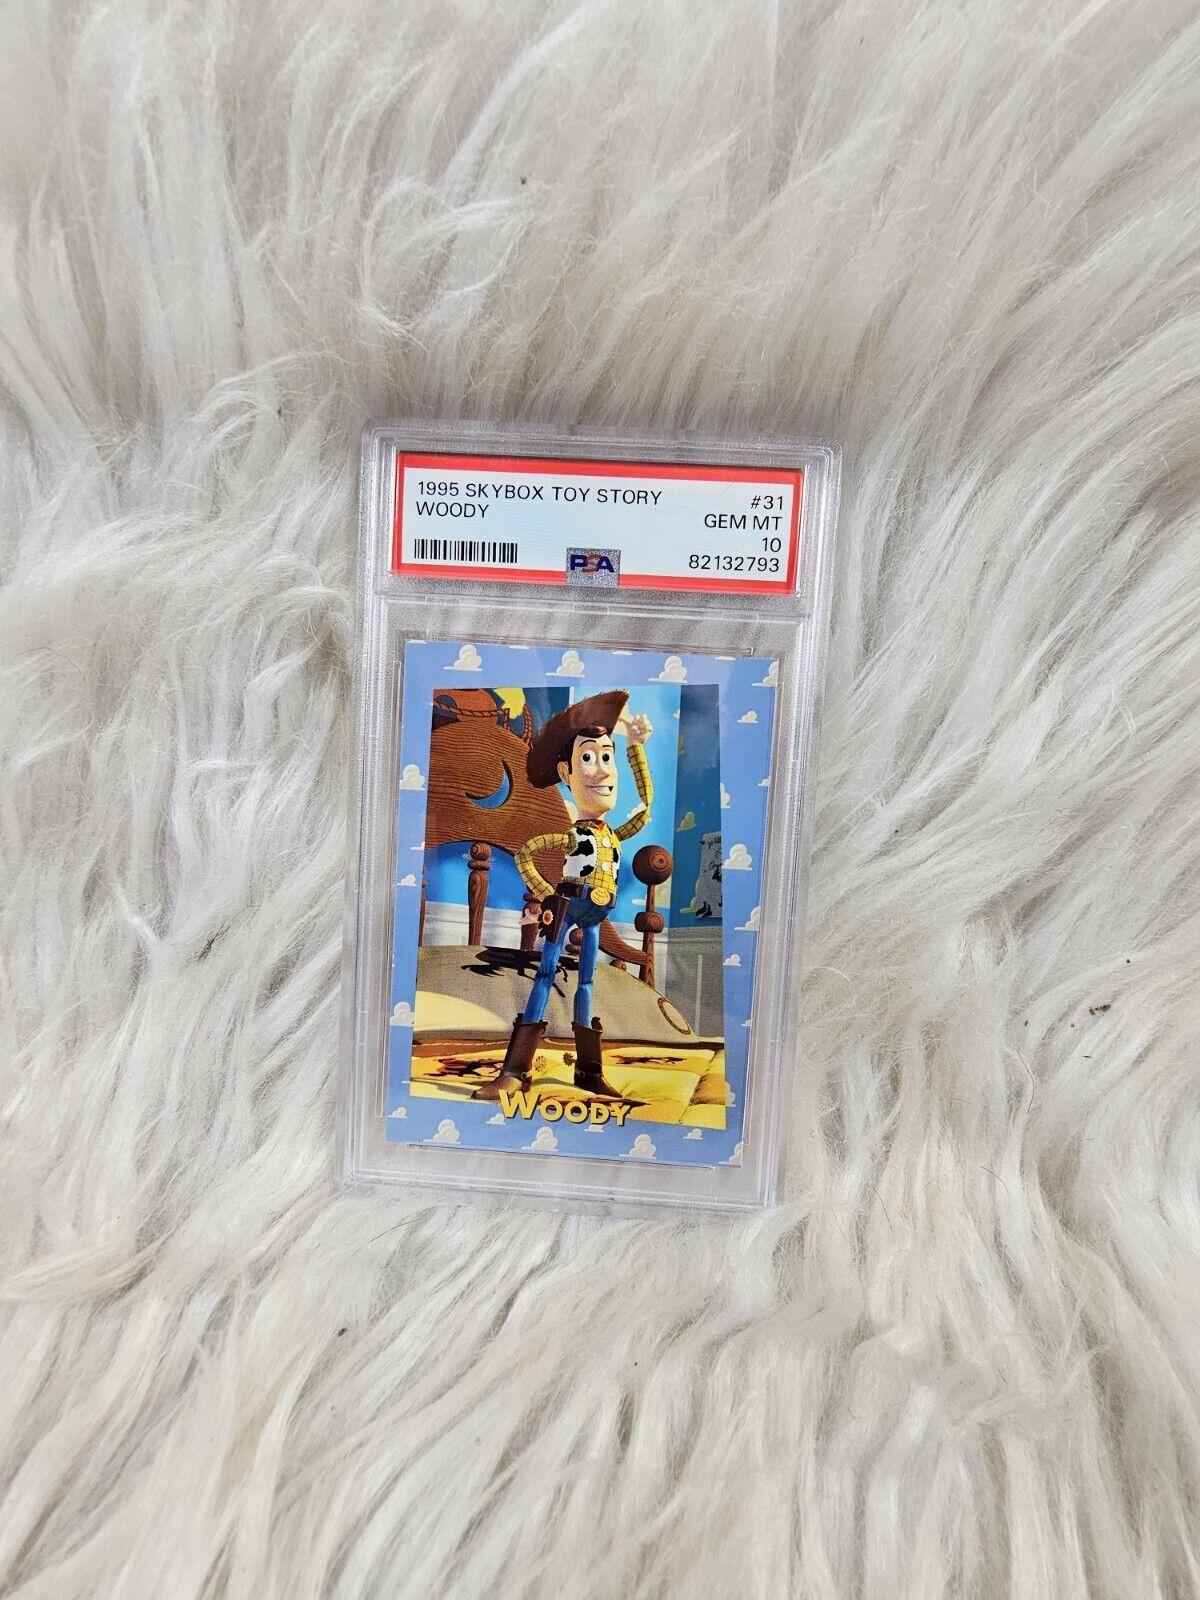 1 Vintage 1995 Skybox Toy Story Trading Cards PSA - Gem Mint 10  Woody- Disney D